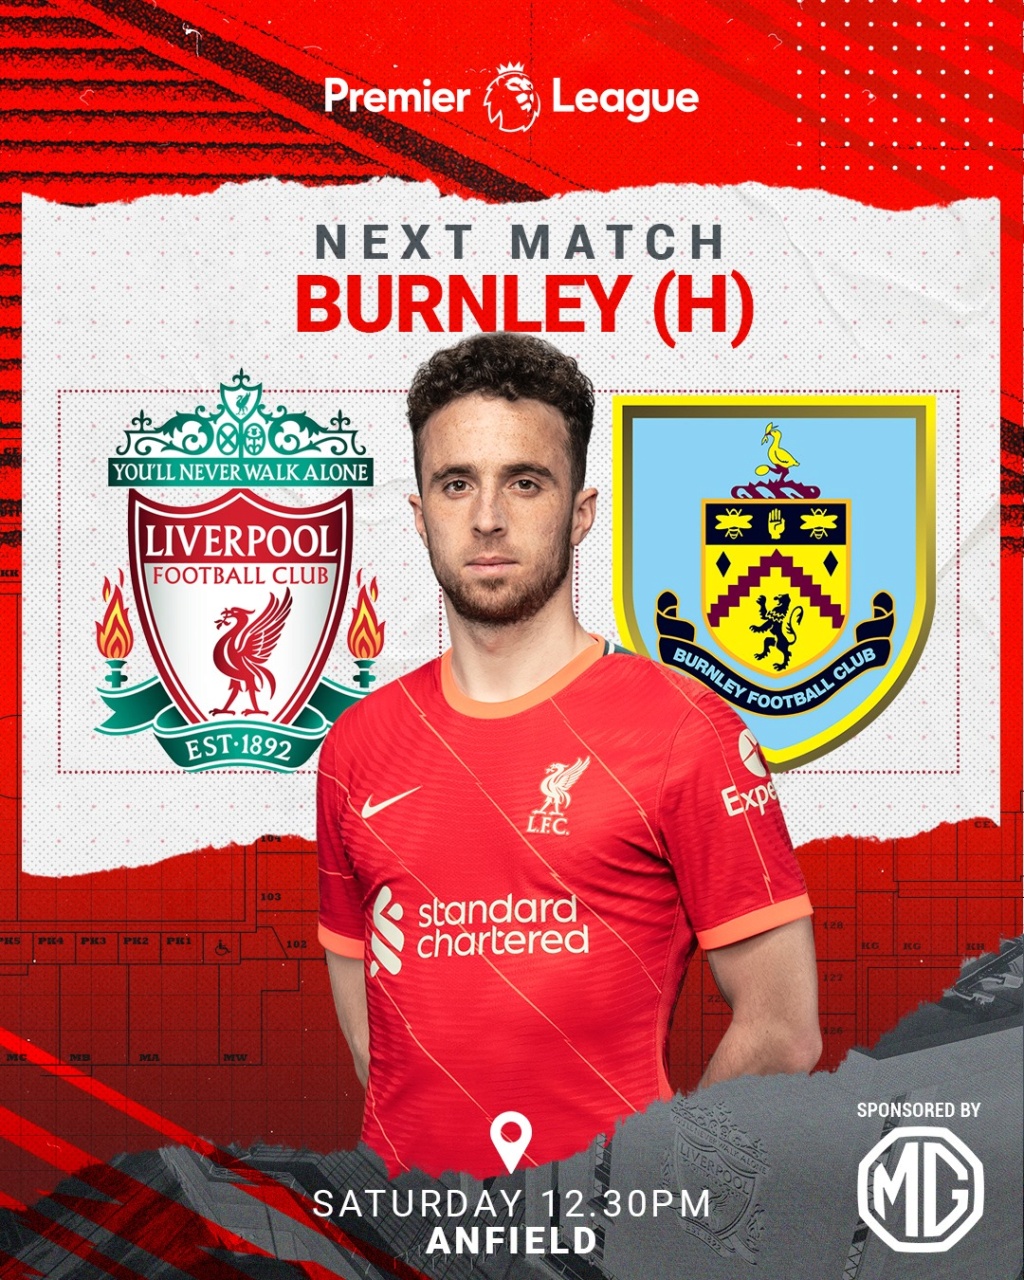 02. Spieltag der Premier League 2021/22 - 11.08. 2021 13:30 FC Liverpool - FC Burnley 2:0 (1:0) - Seite 7 1249